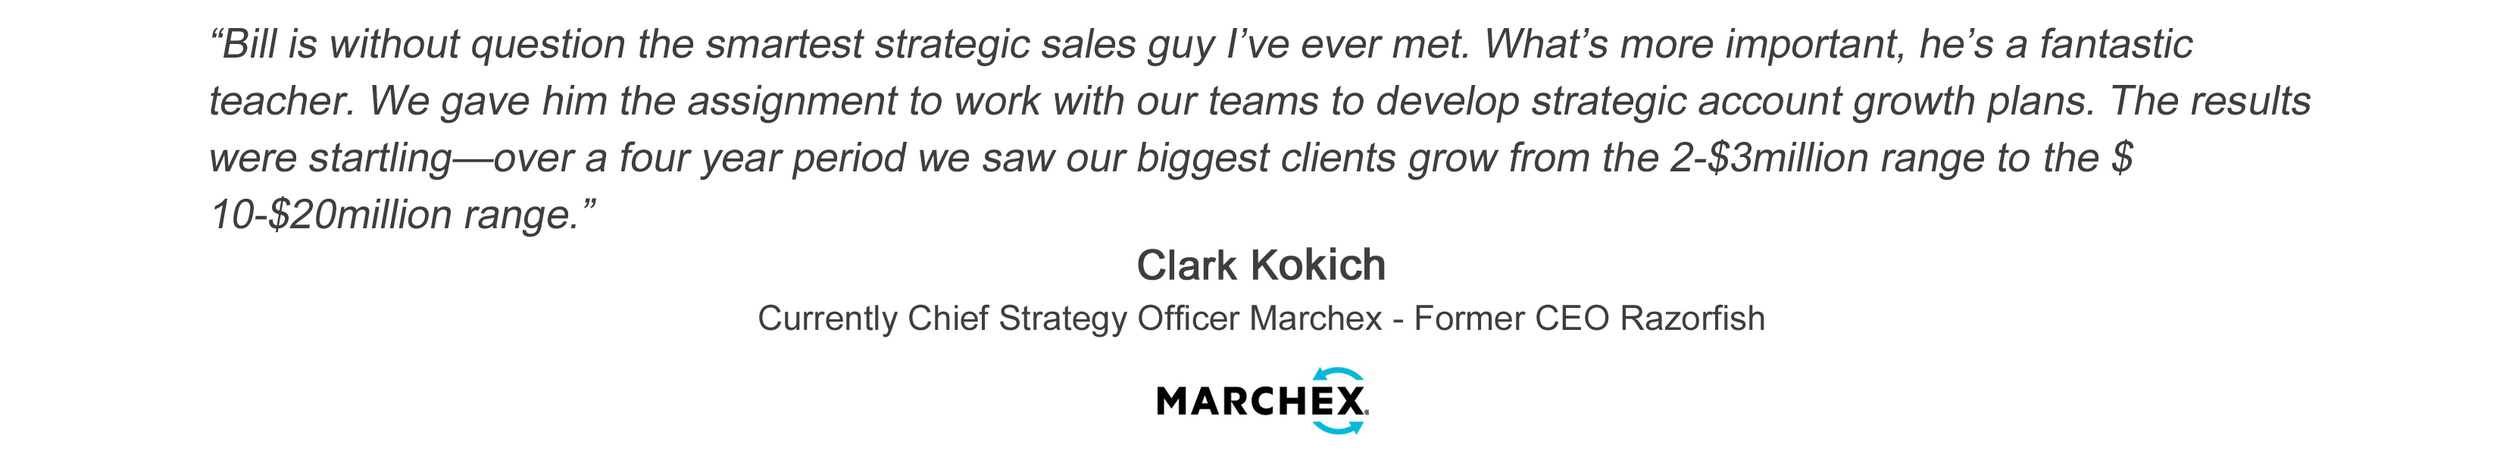 Clark Kokich Marchex Logo Only.jpg